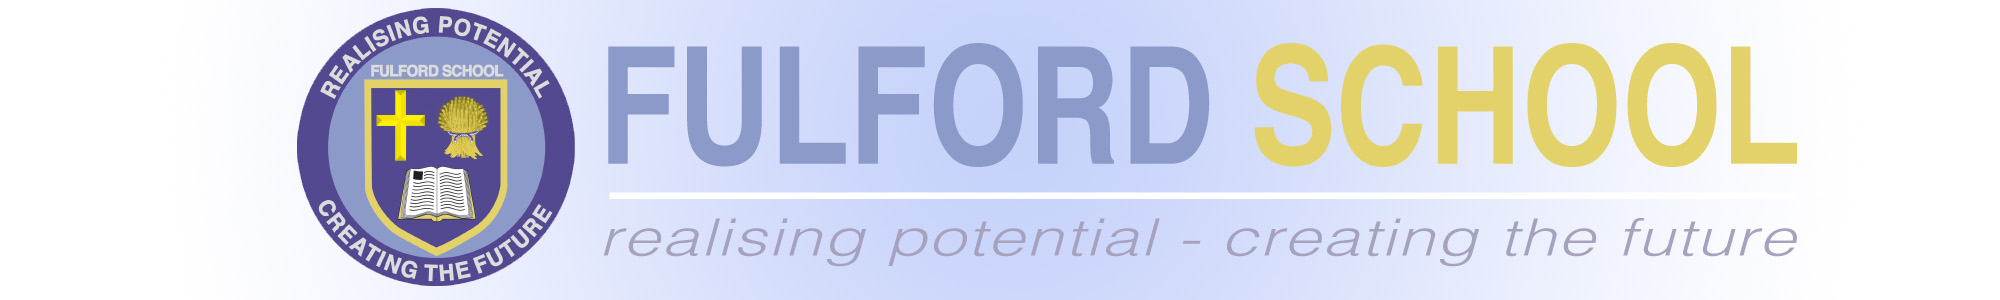 fulford logo